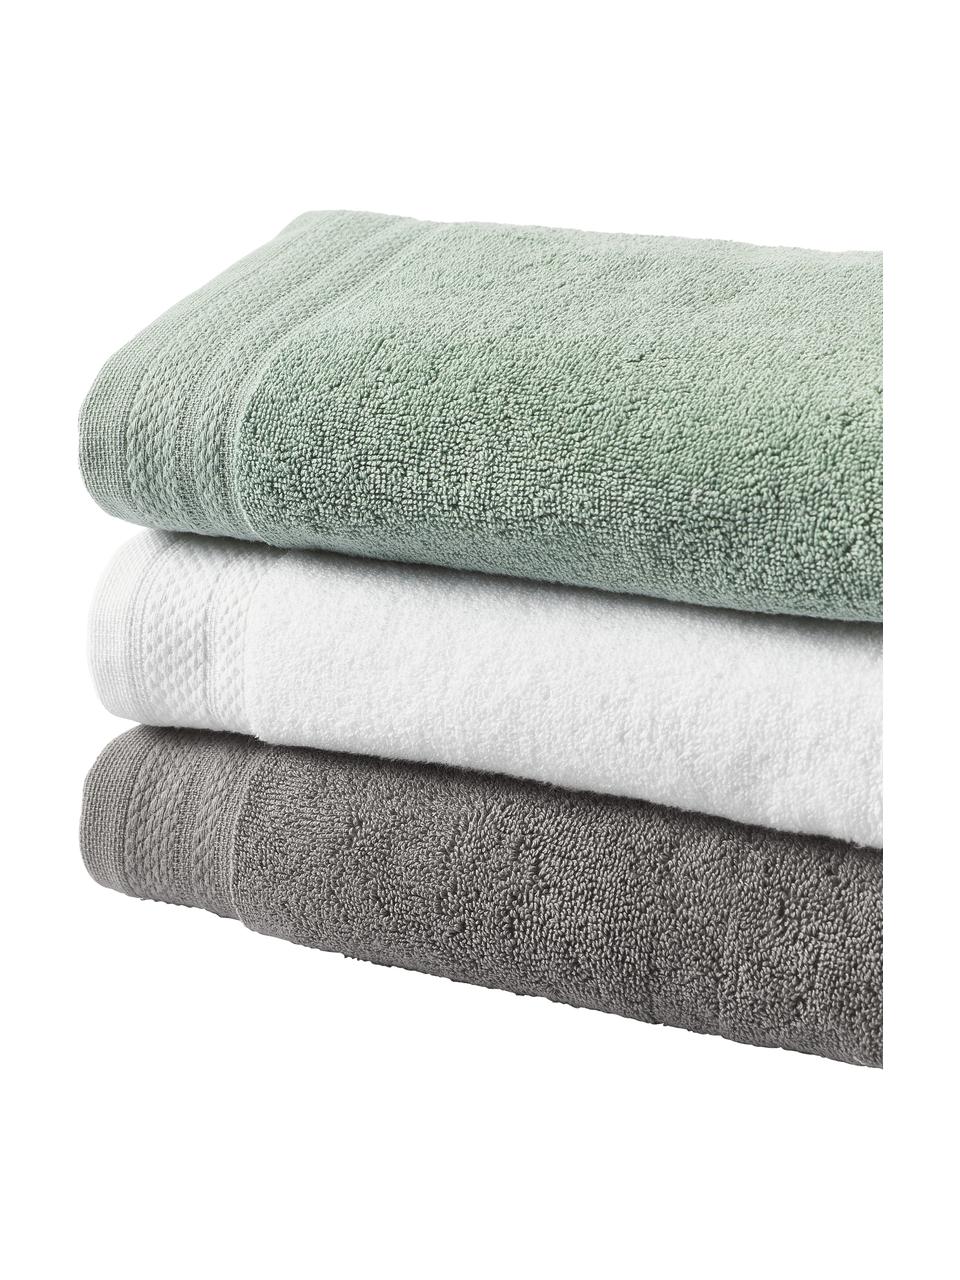 Set 3 asciugamani in cotone organico Premium, 100% cotone organico certificato GOTS (da GCL International, GCL-300517).
Qualità pesante, 600 g/m², Grigio scuro, Set in varie misure